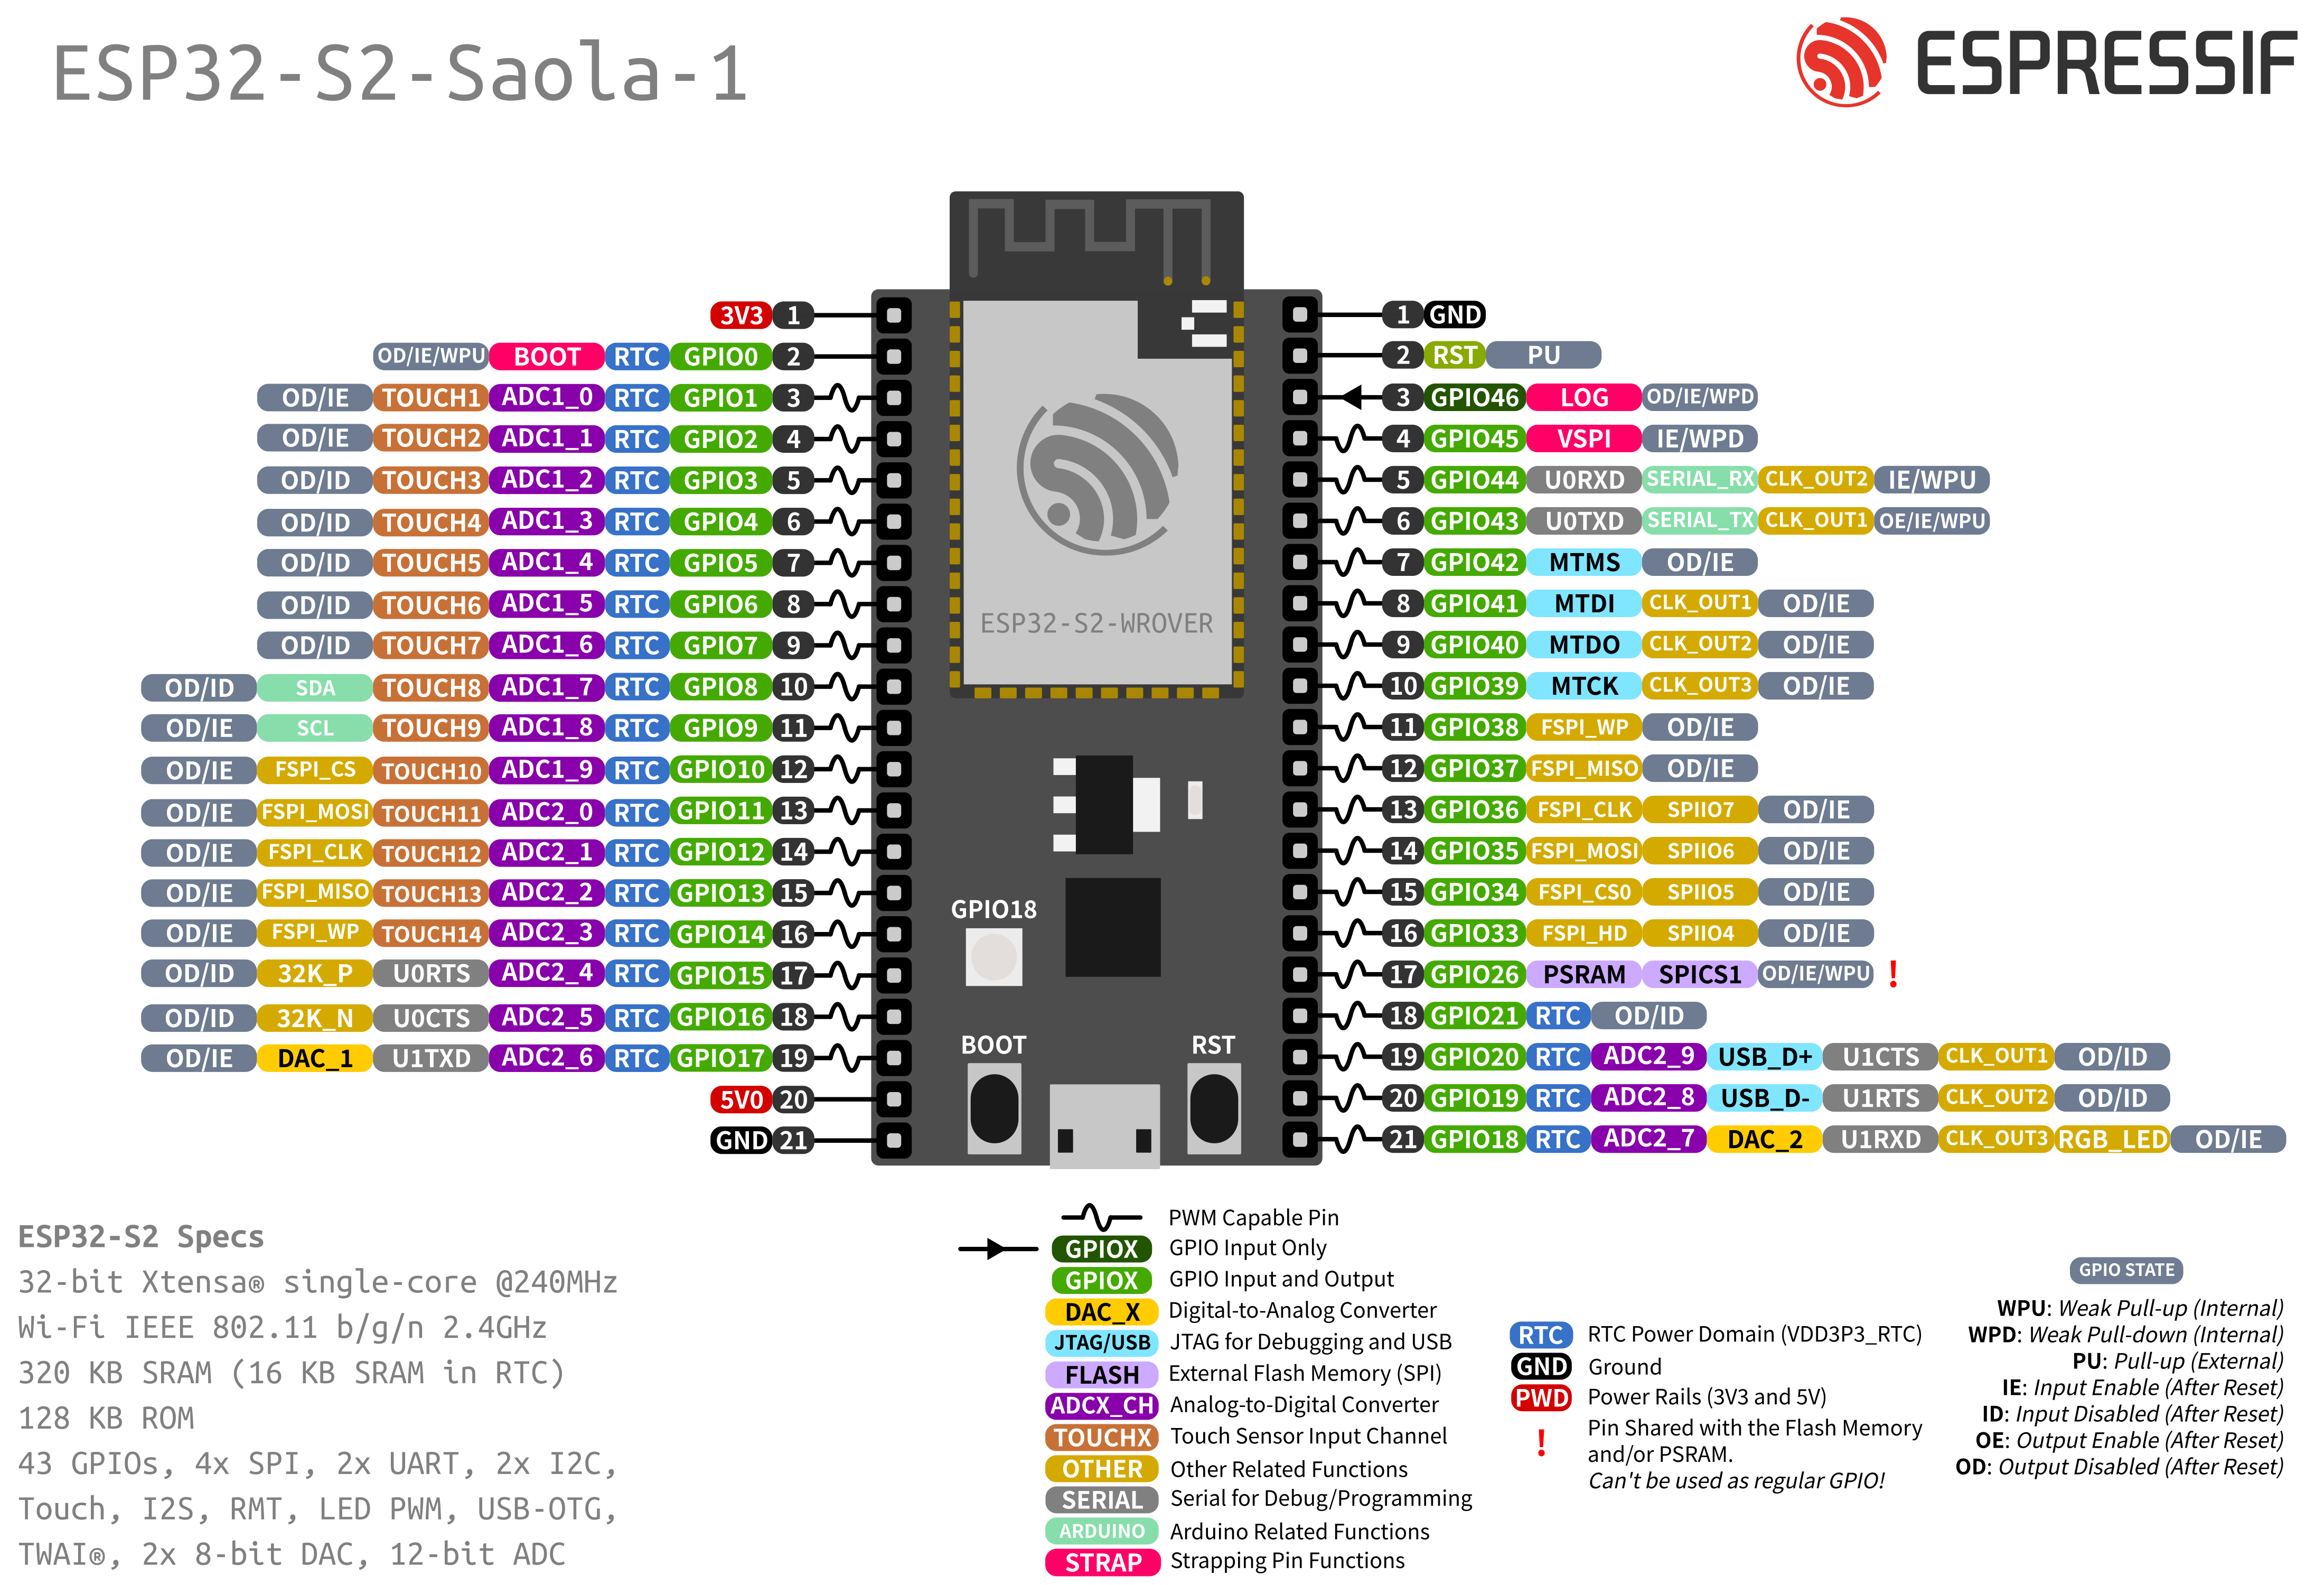 ESP32-S2-Saola-1 (click to enlarge)